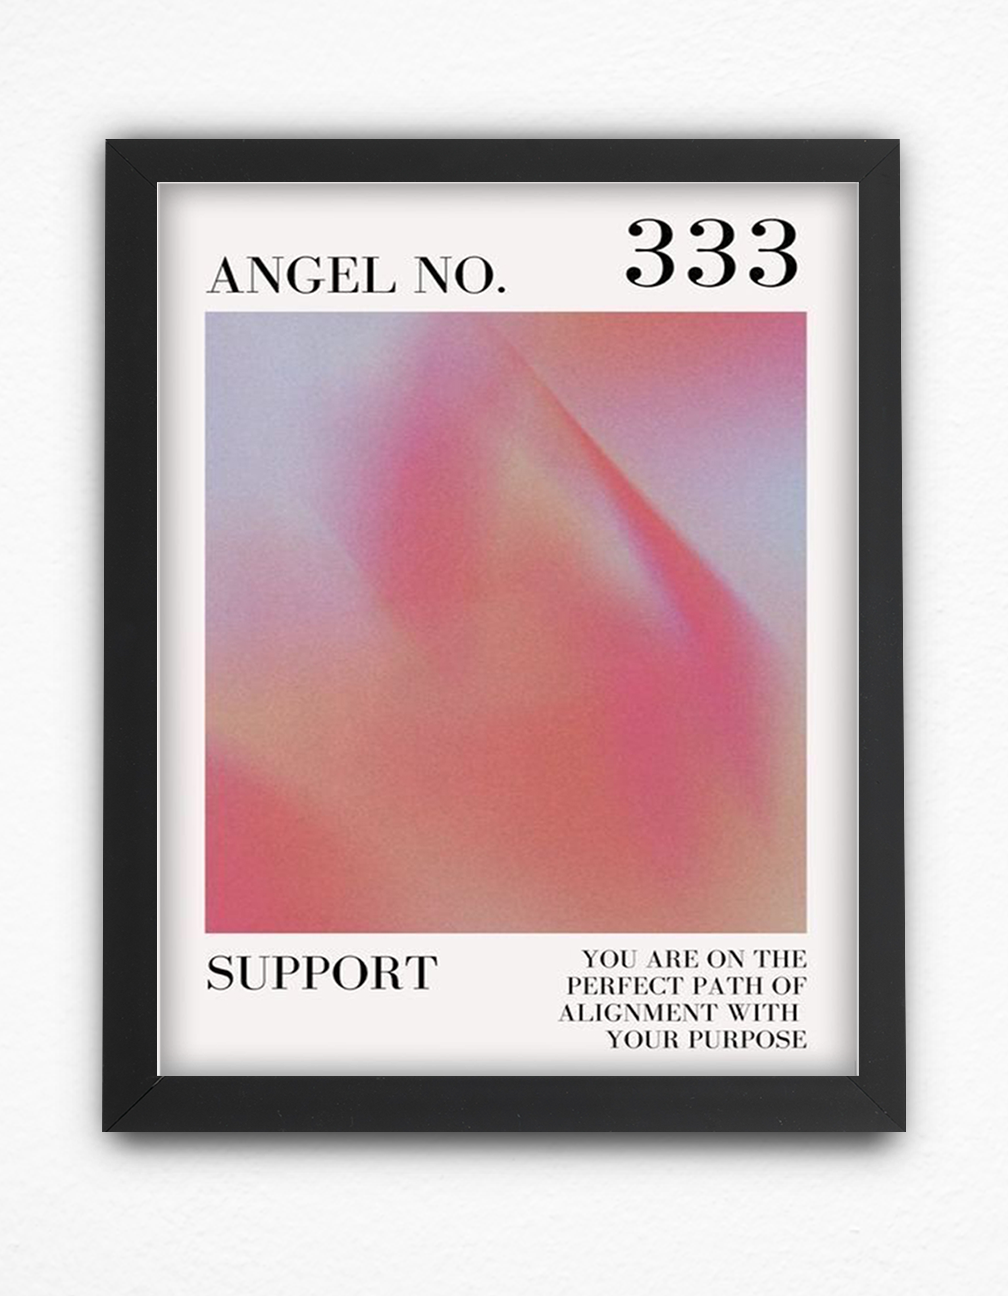 Angel no. 333